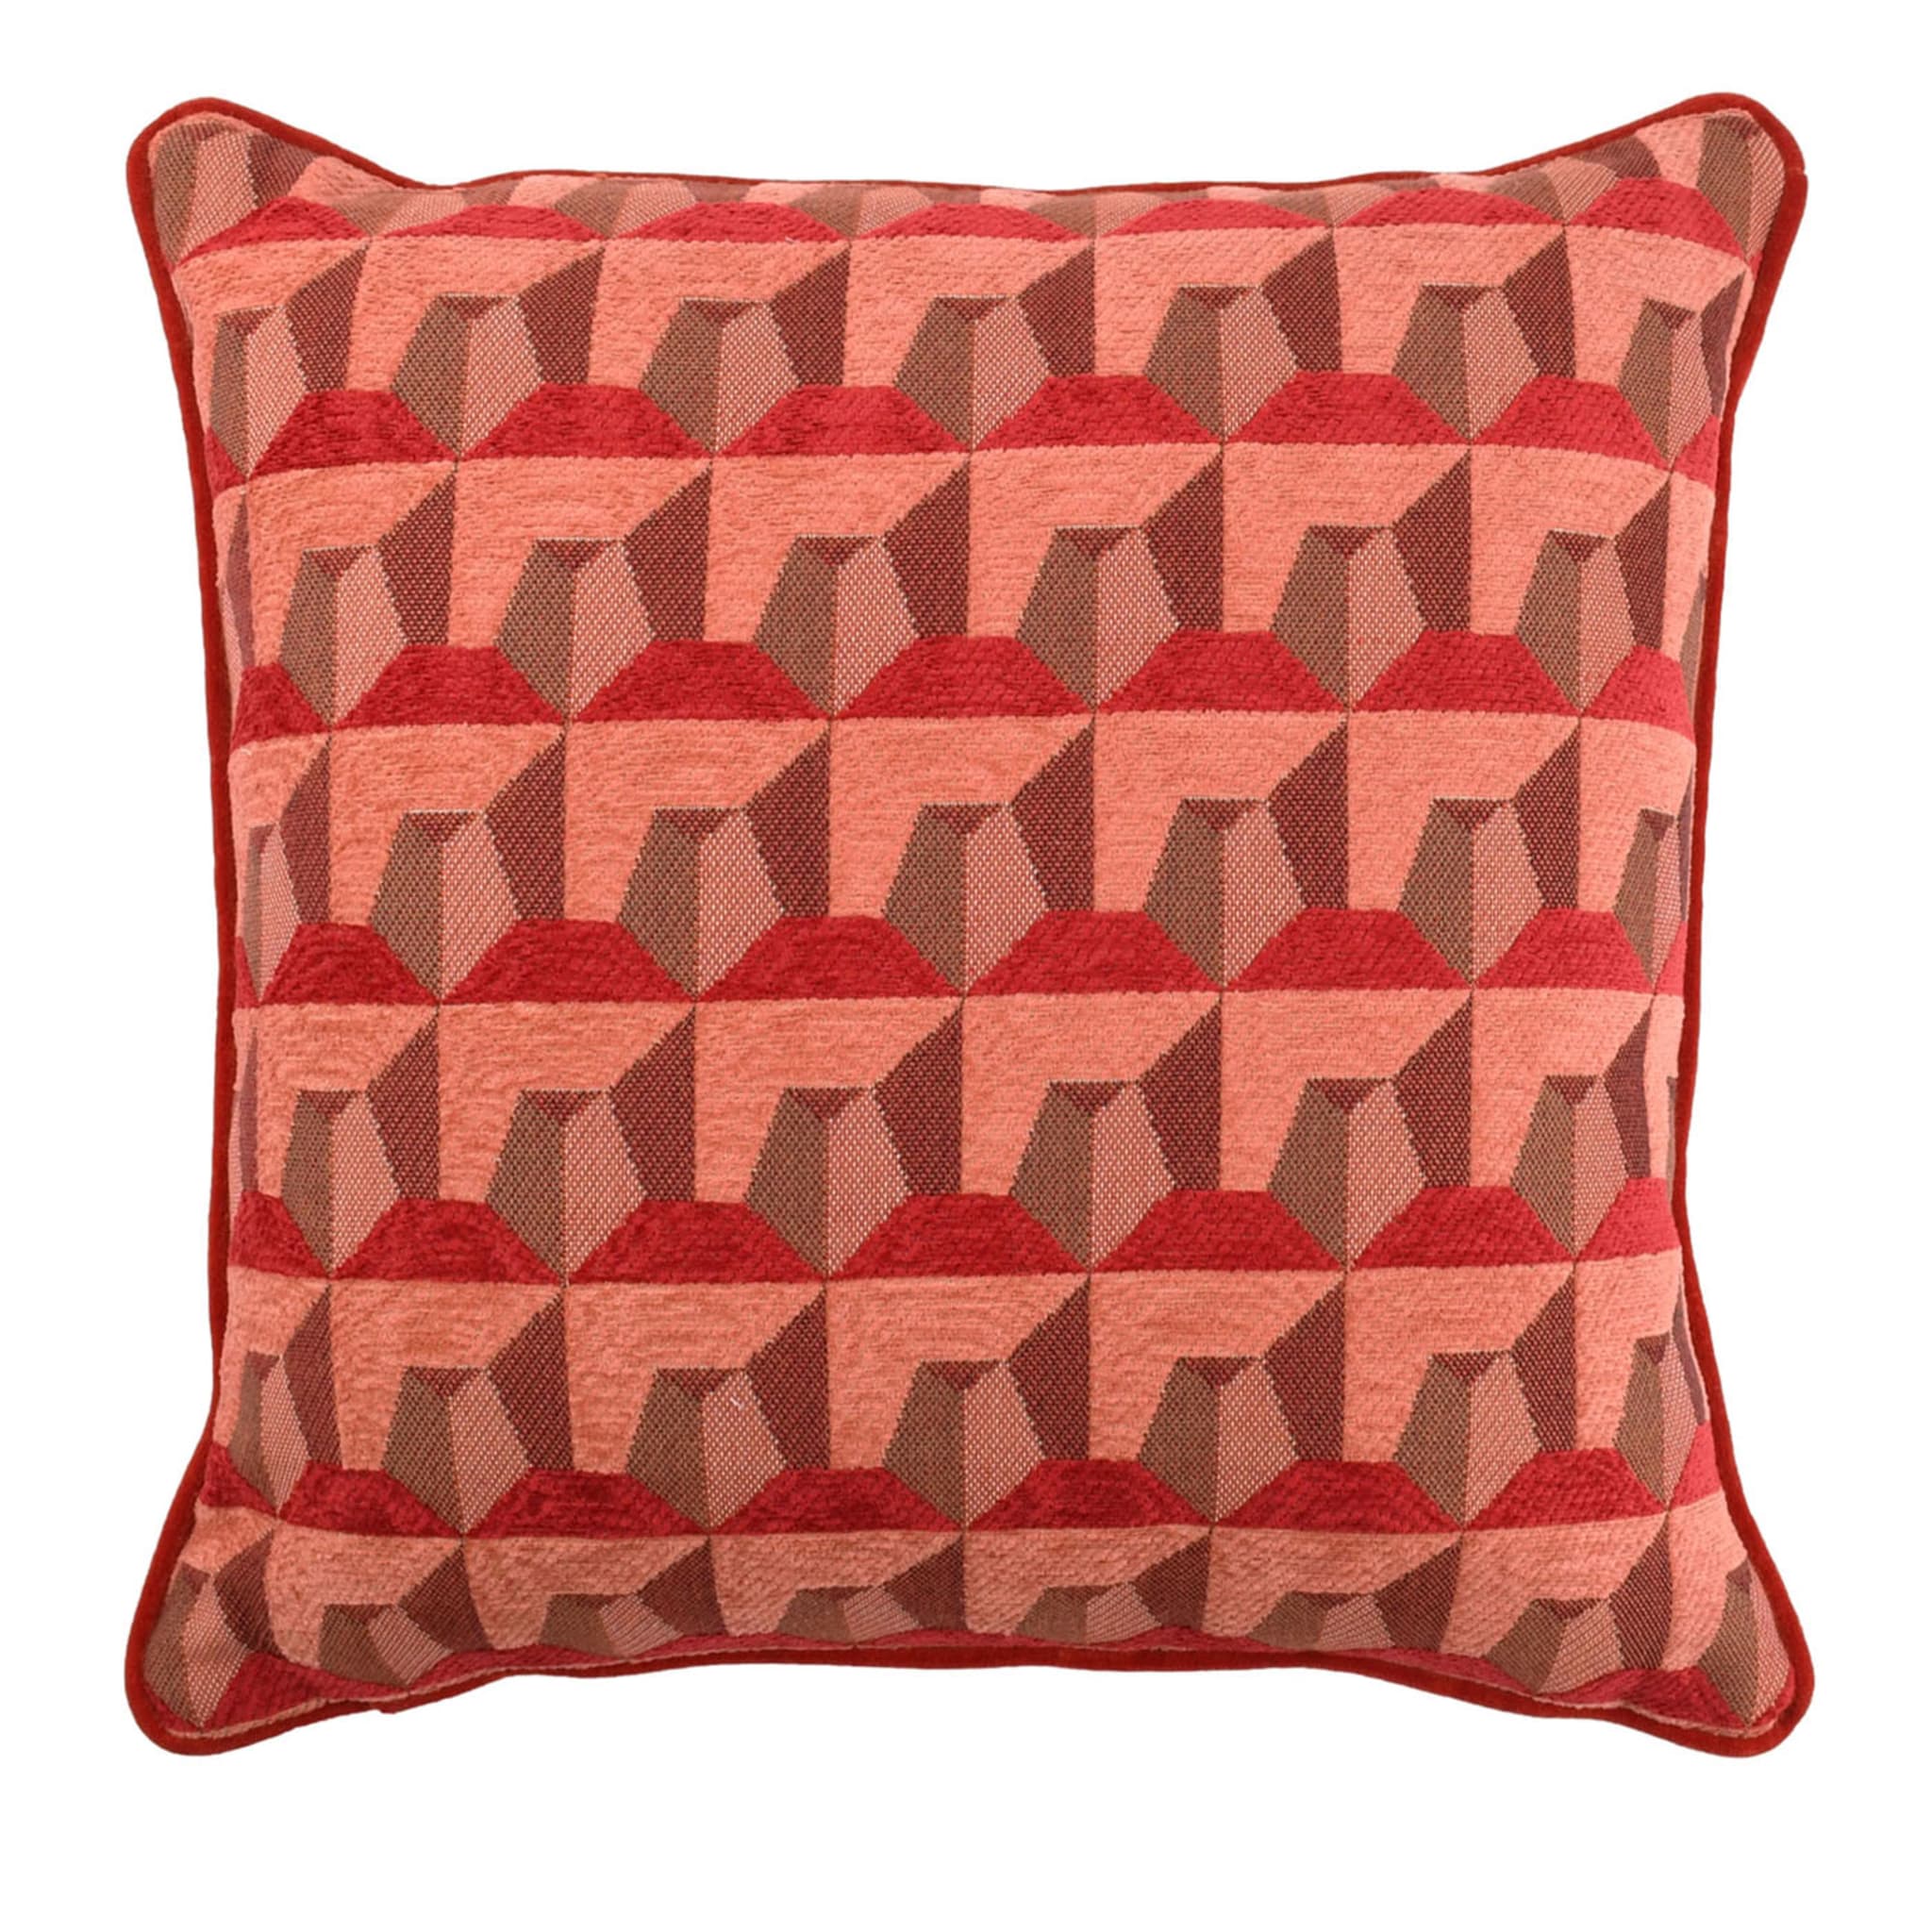 Carrè Cushion in geometric Relief Jacquard Fabric #2 - Main view